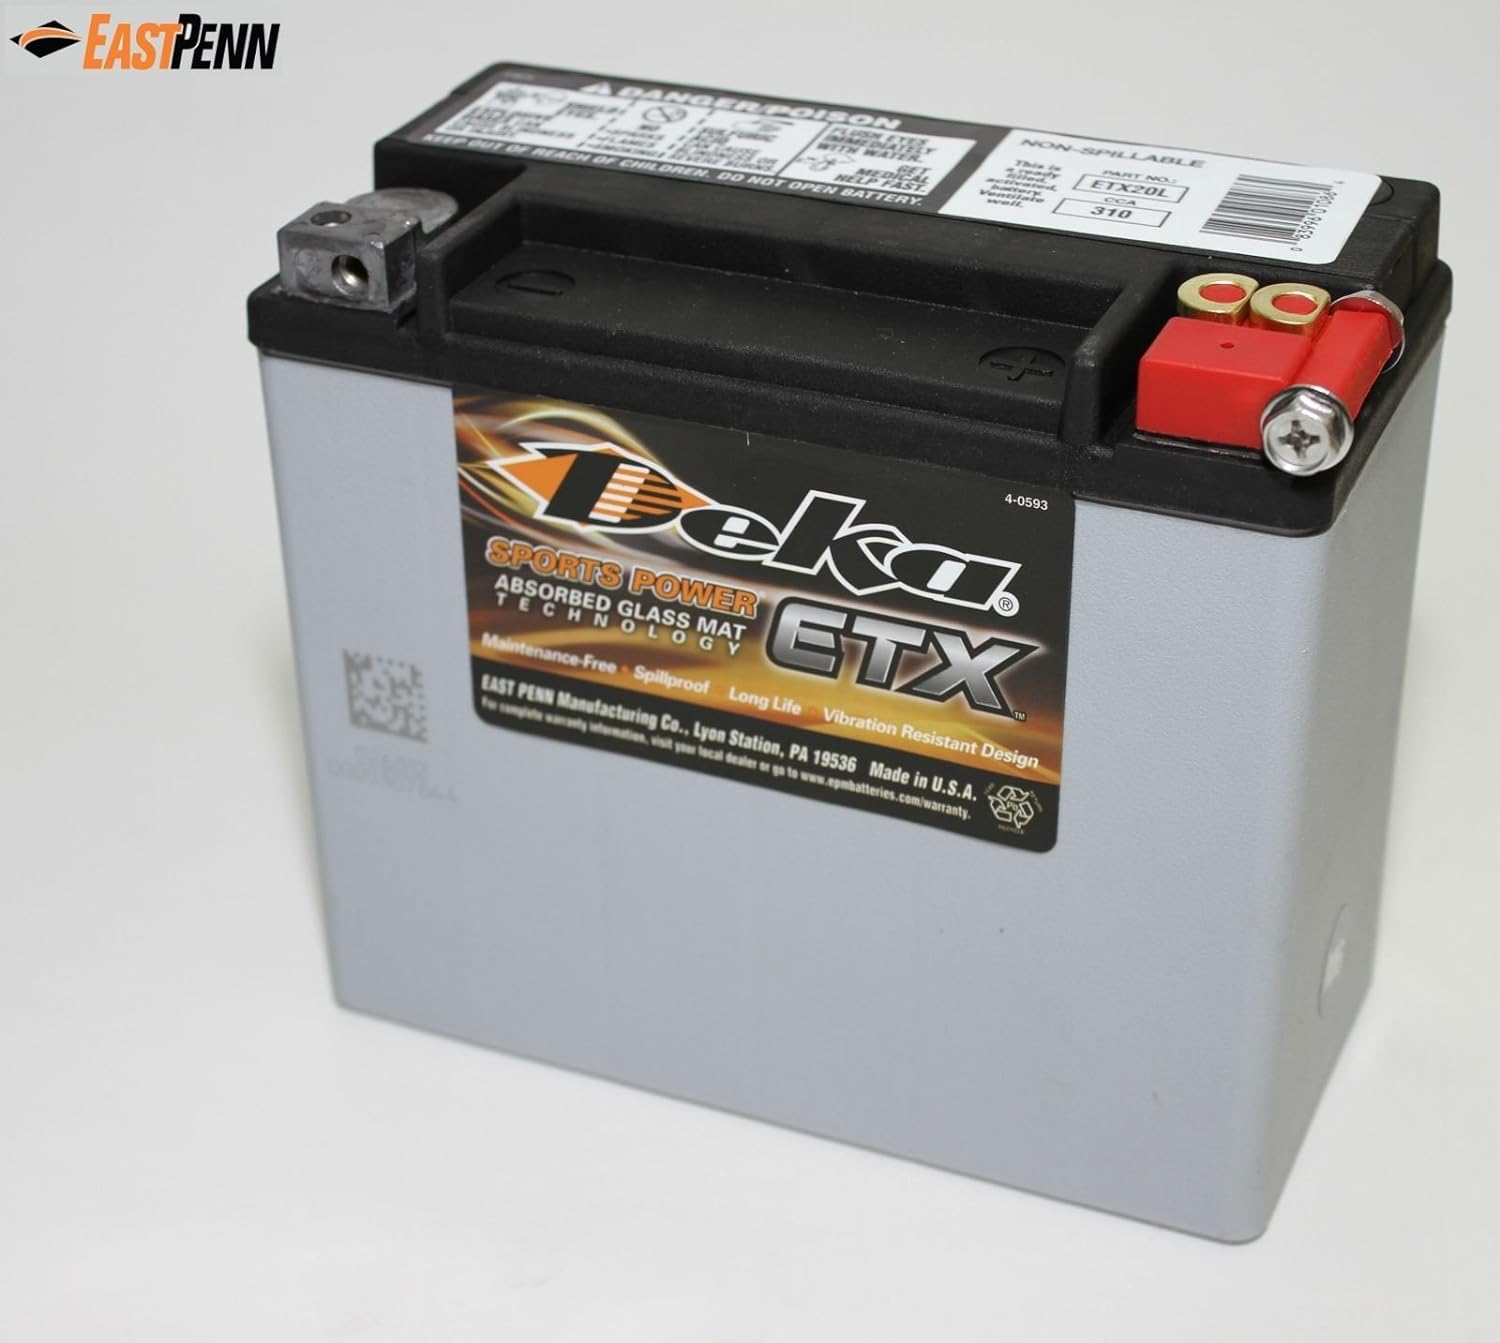 Genuine EastPenn Deka ETX20L PowerSport Battery Review